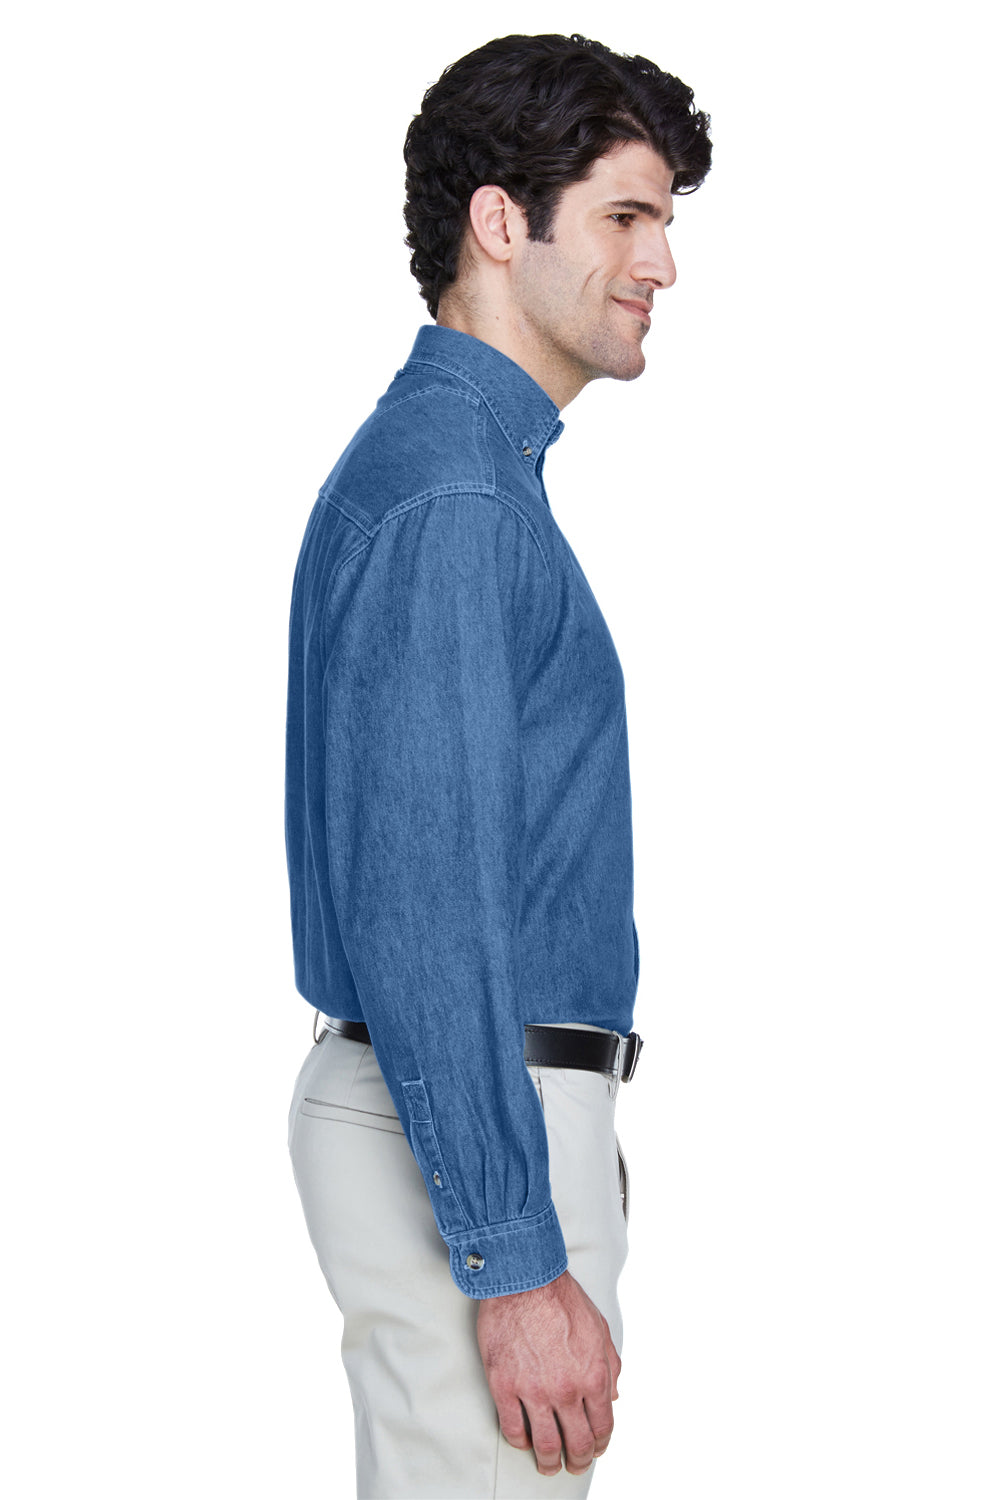 UltraClub 8960 Mens Cypress Denim Long Sleeve Button Down Shirt w/ Pocket Indigo Blue Side